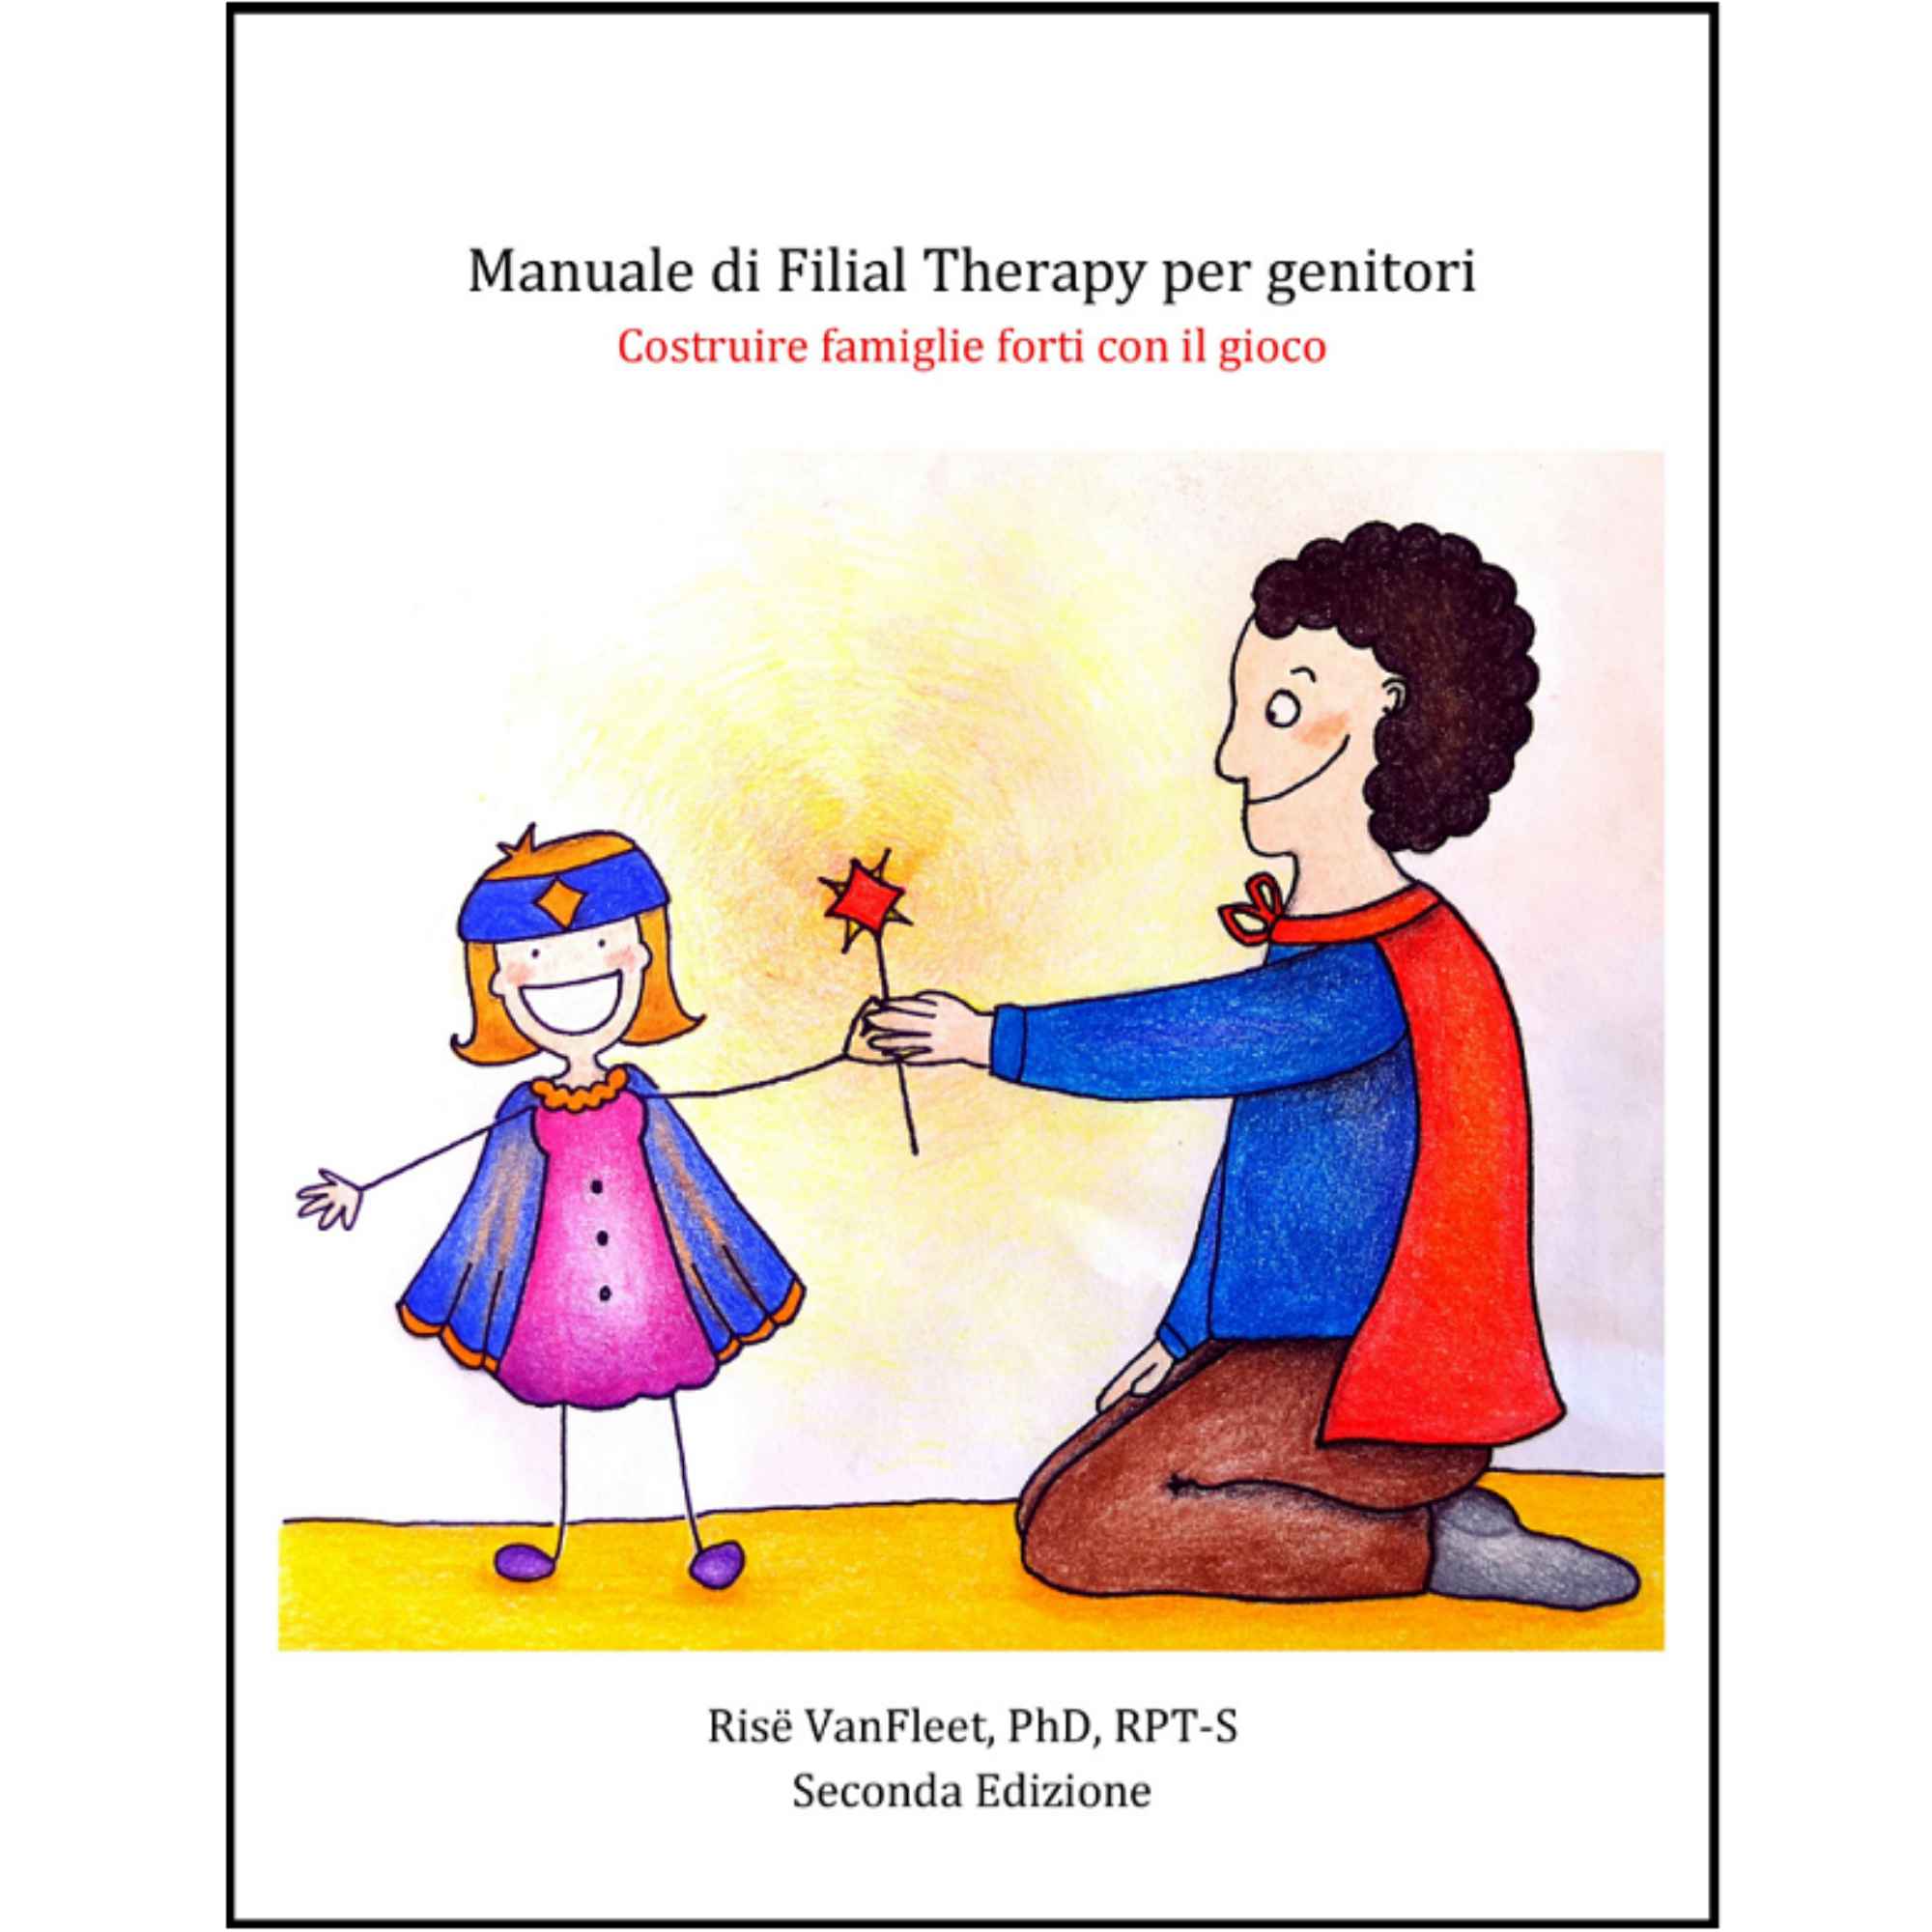 manuale di filial therapy per genitori di rise van fleet